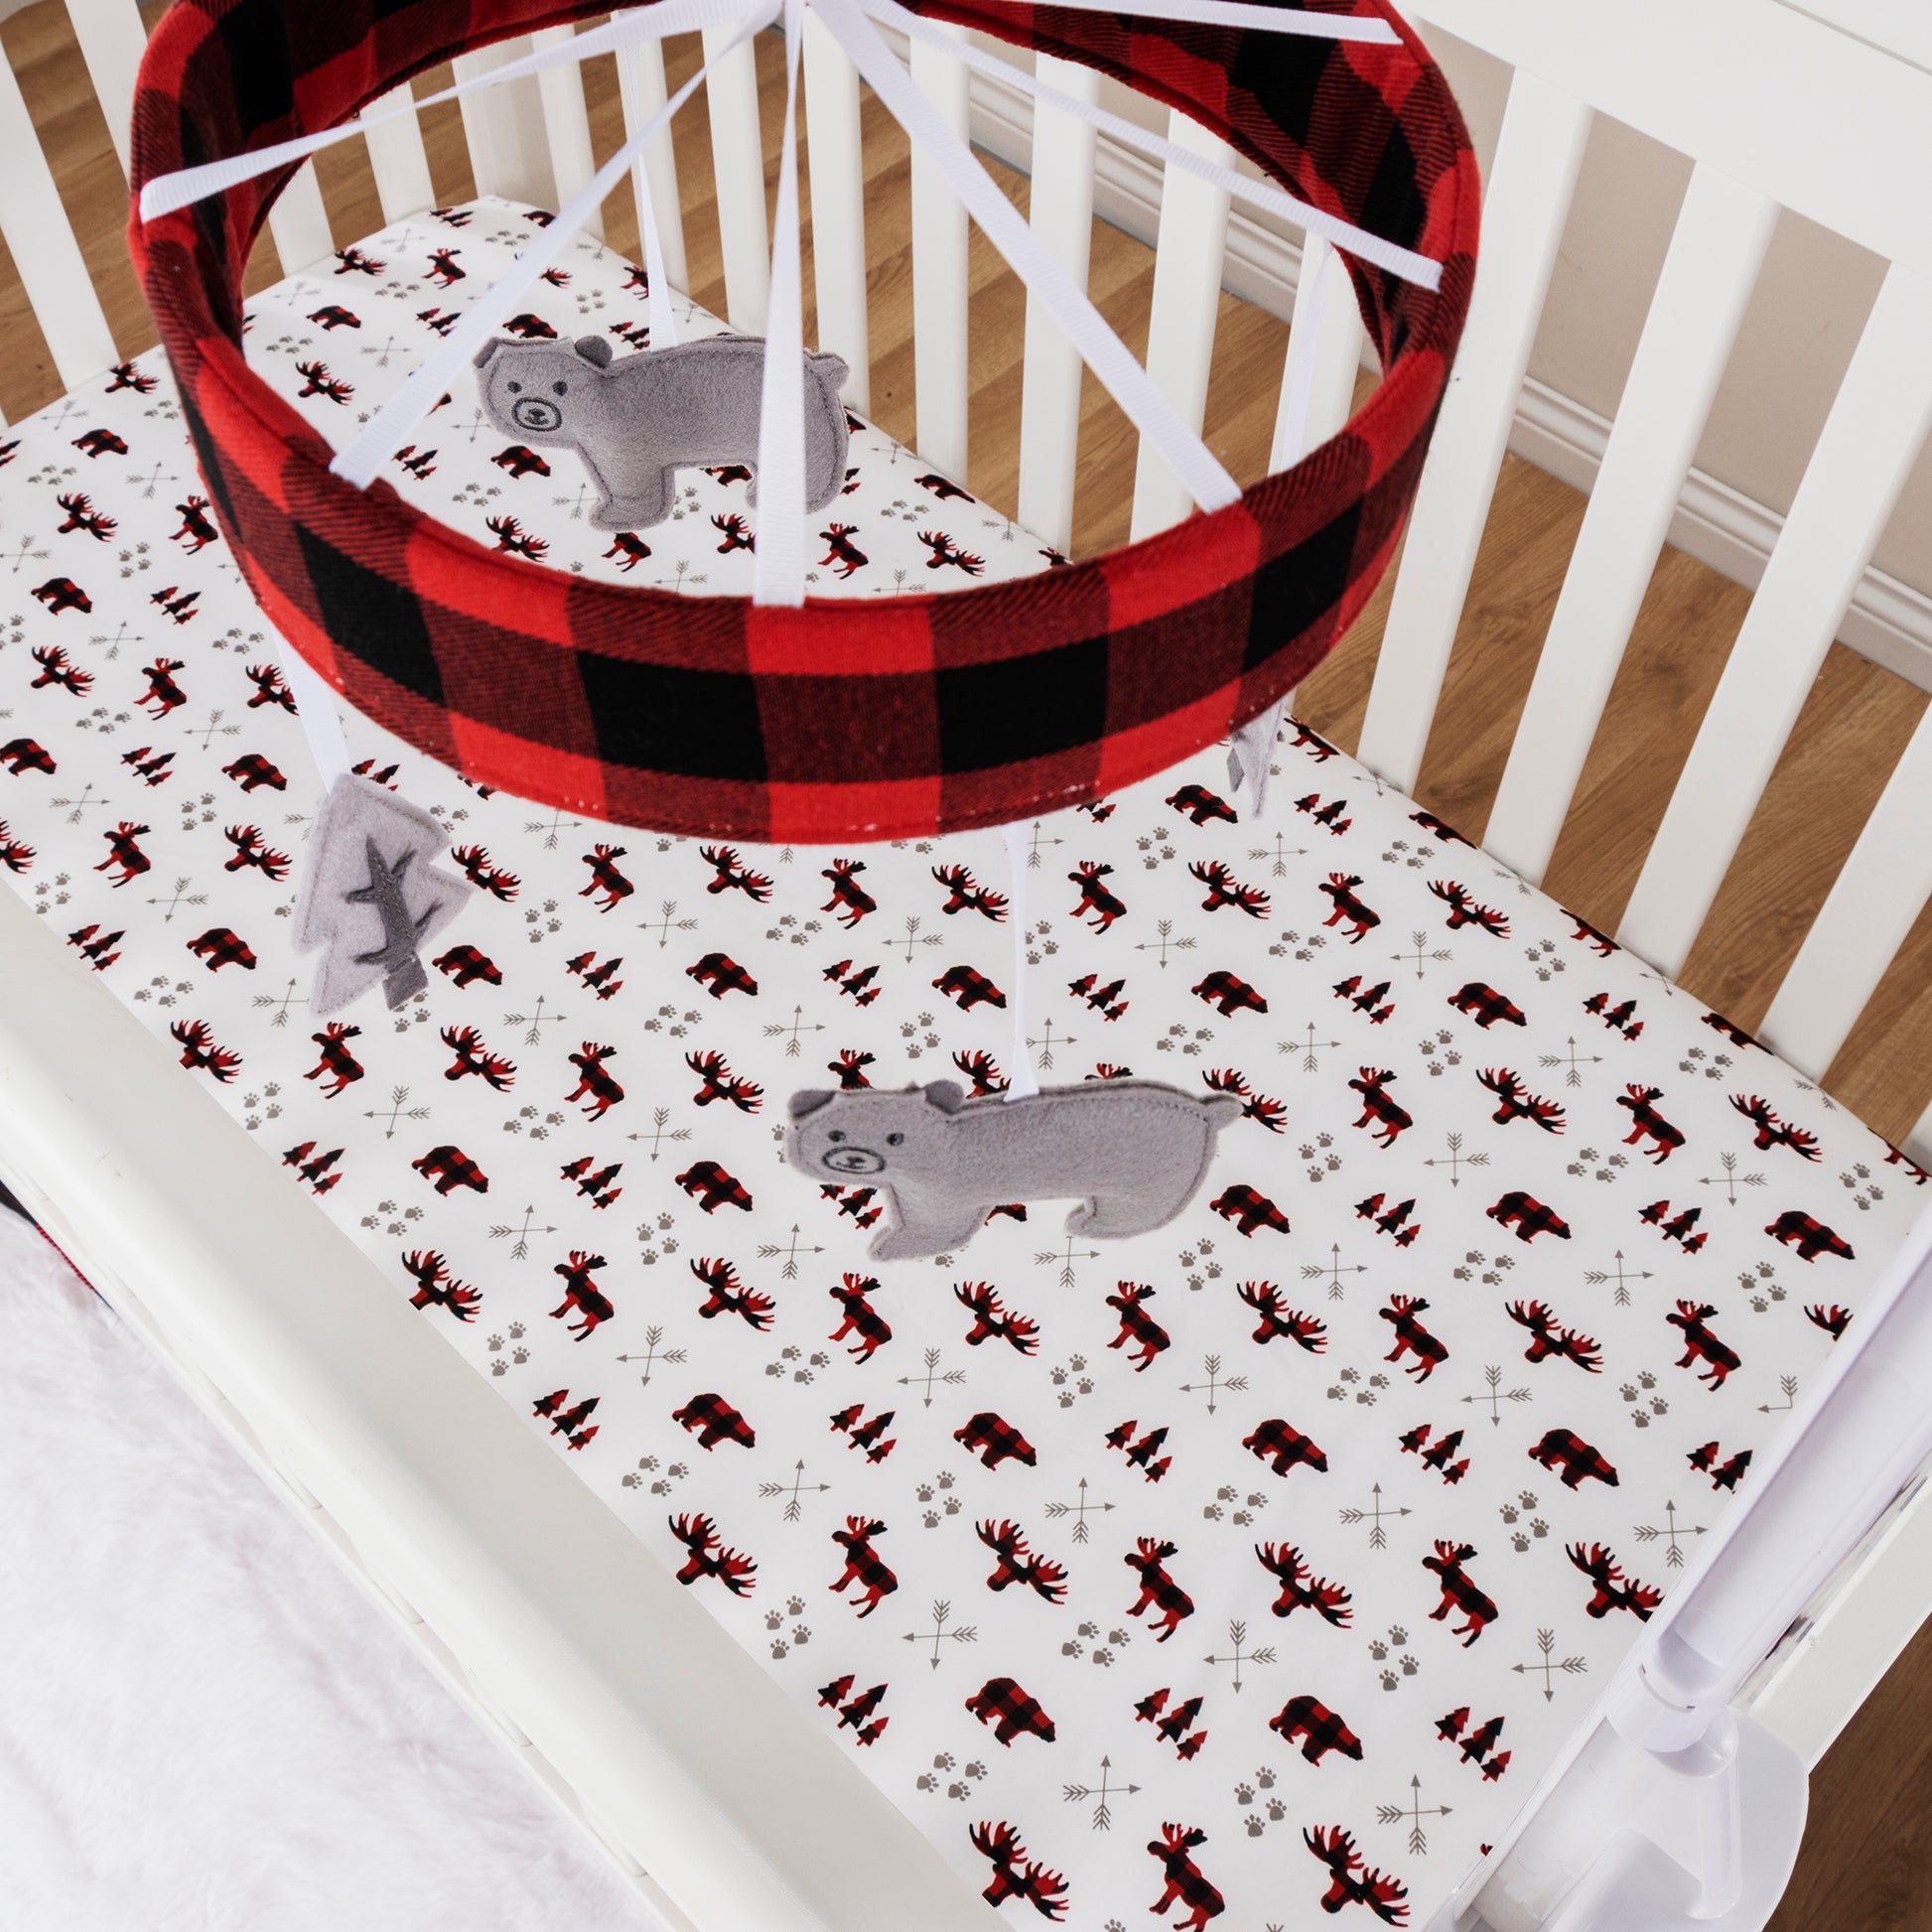  Buffalo Check 3 Piece Crib Bedding Set by Sammy & Lou®-crib mobile and crib sheet overhead stylized room view